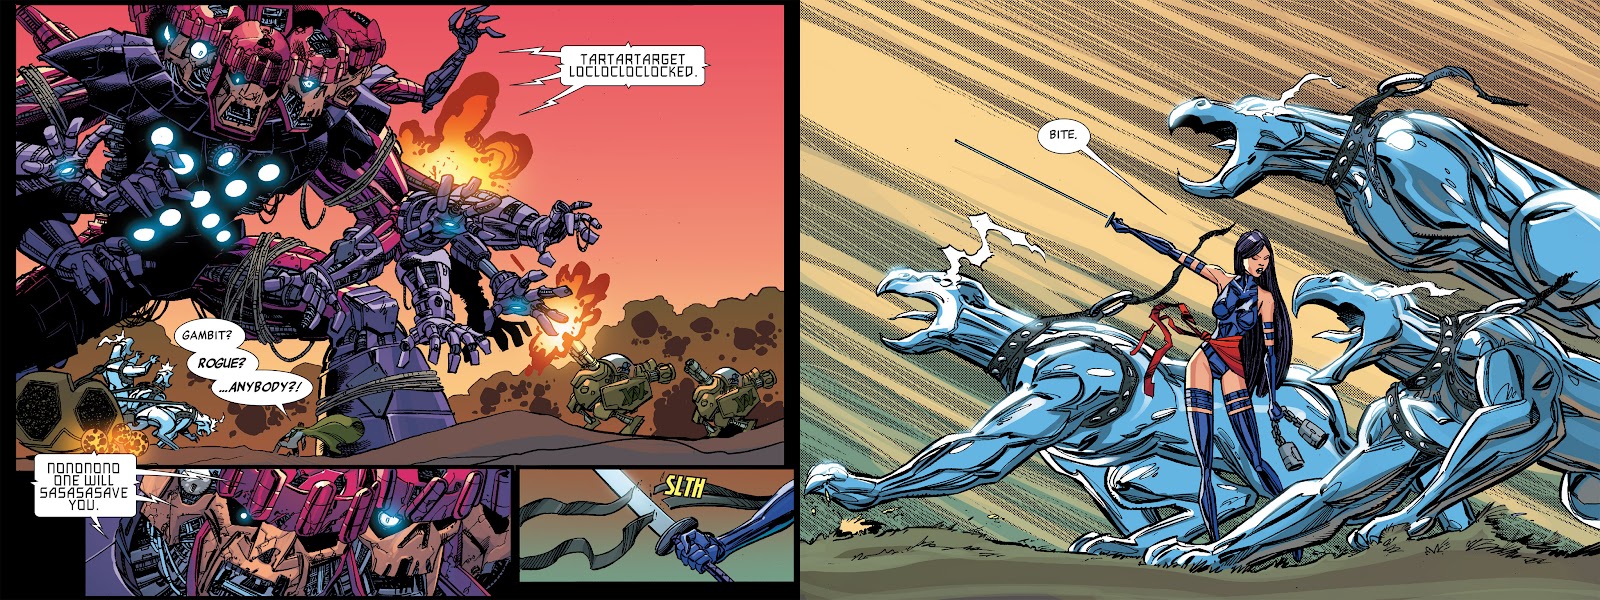 X-Men '92 (Infinite Comics) issue 7 - Page 18